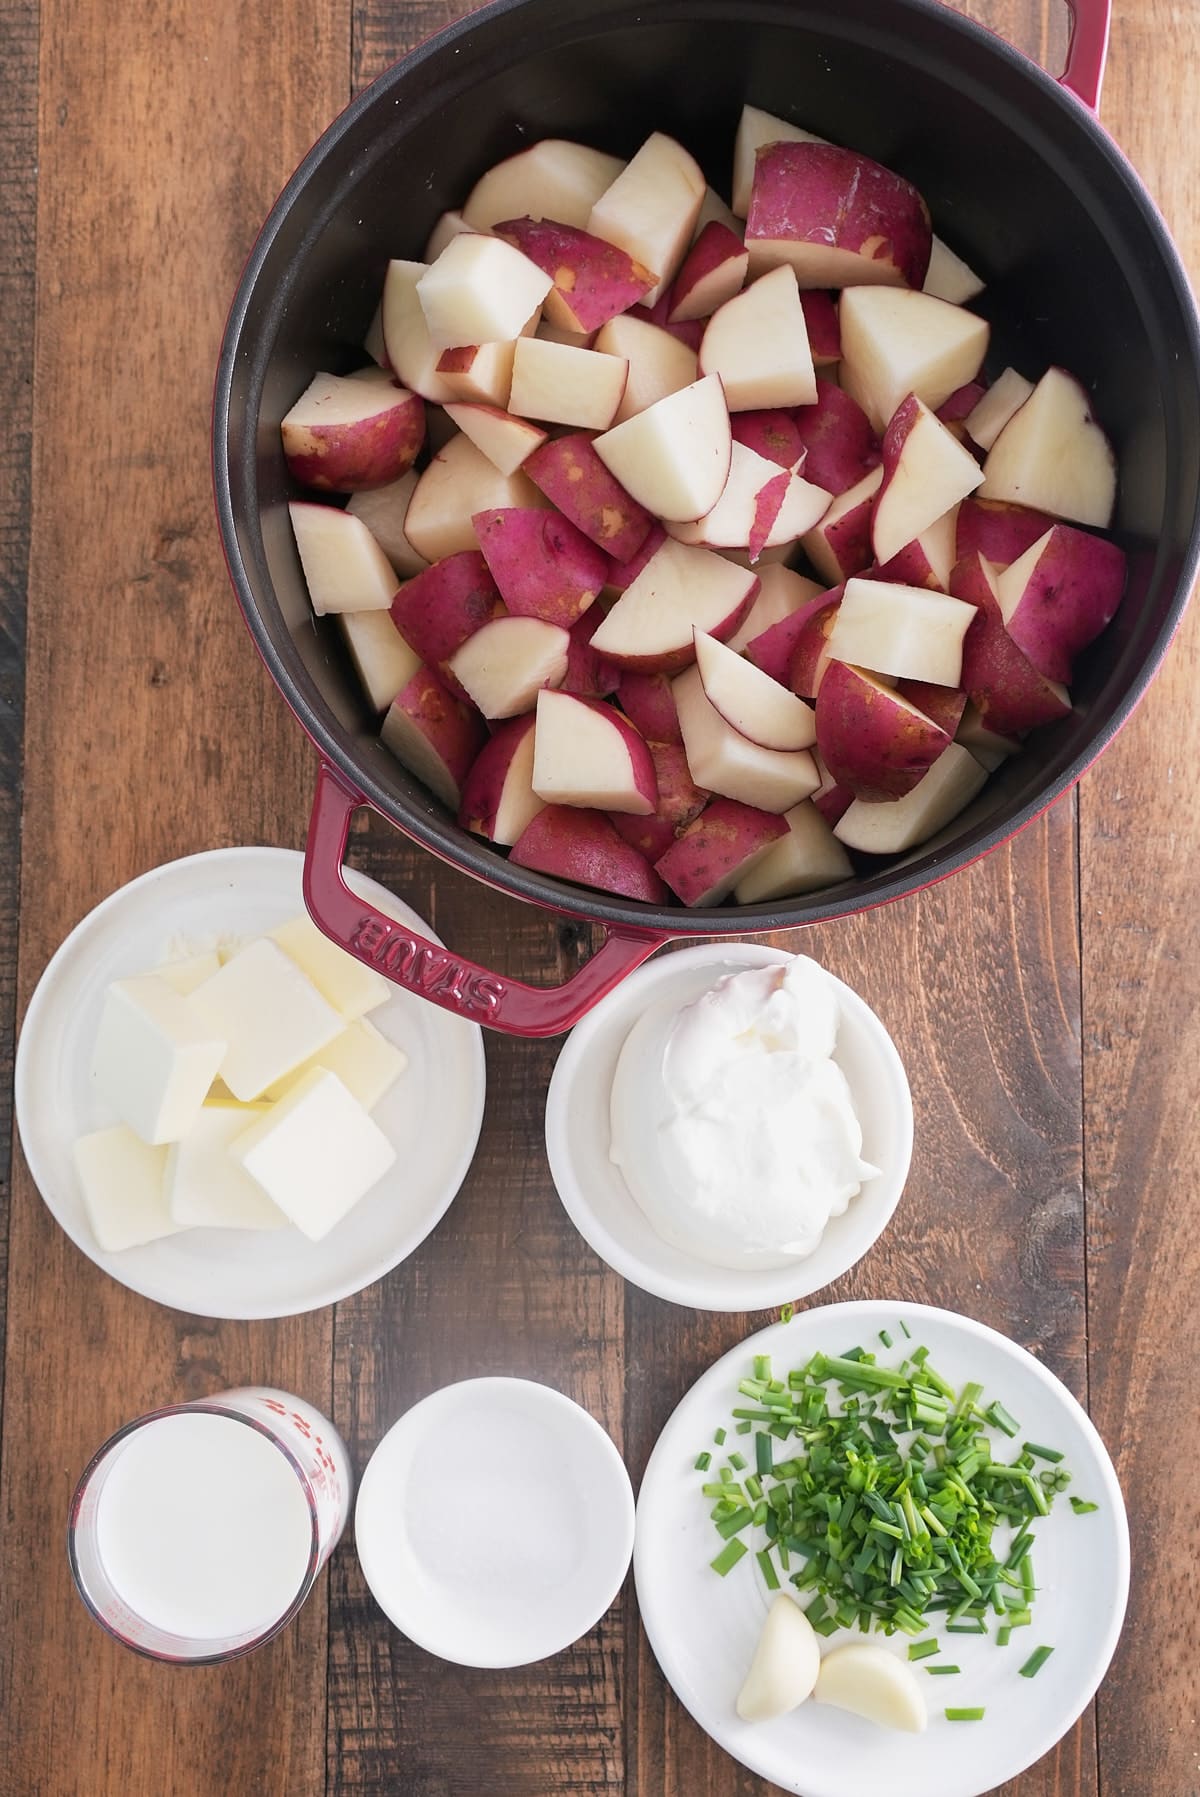 Mashed red skinned potatoes recipe ingredients set into individual bowls.